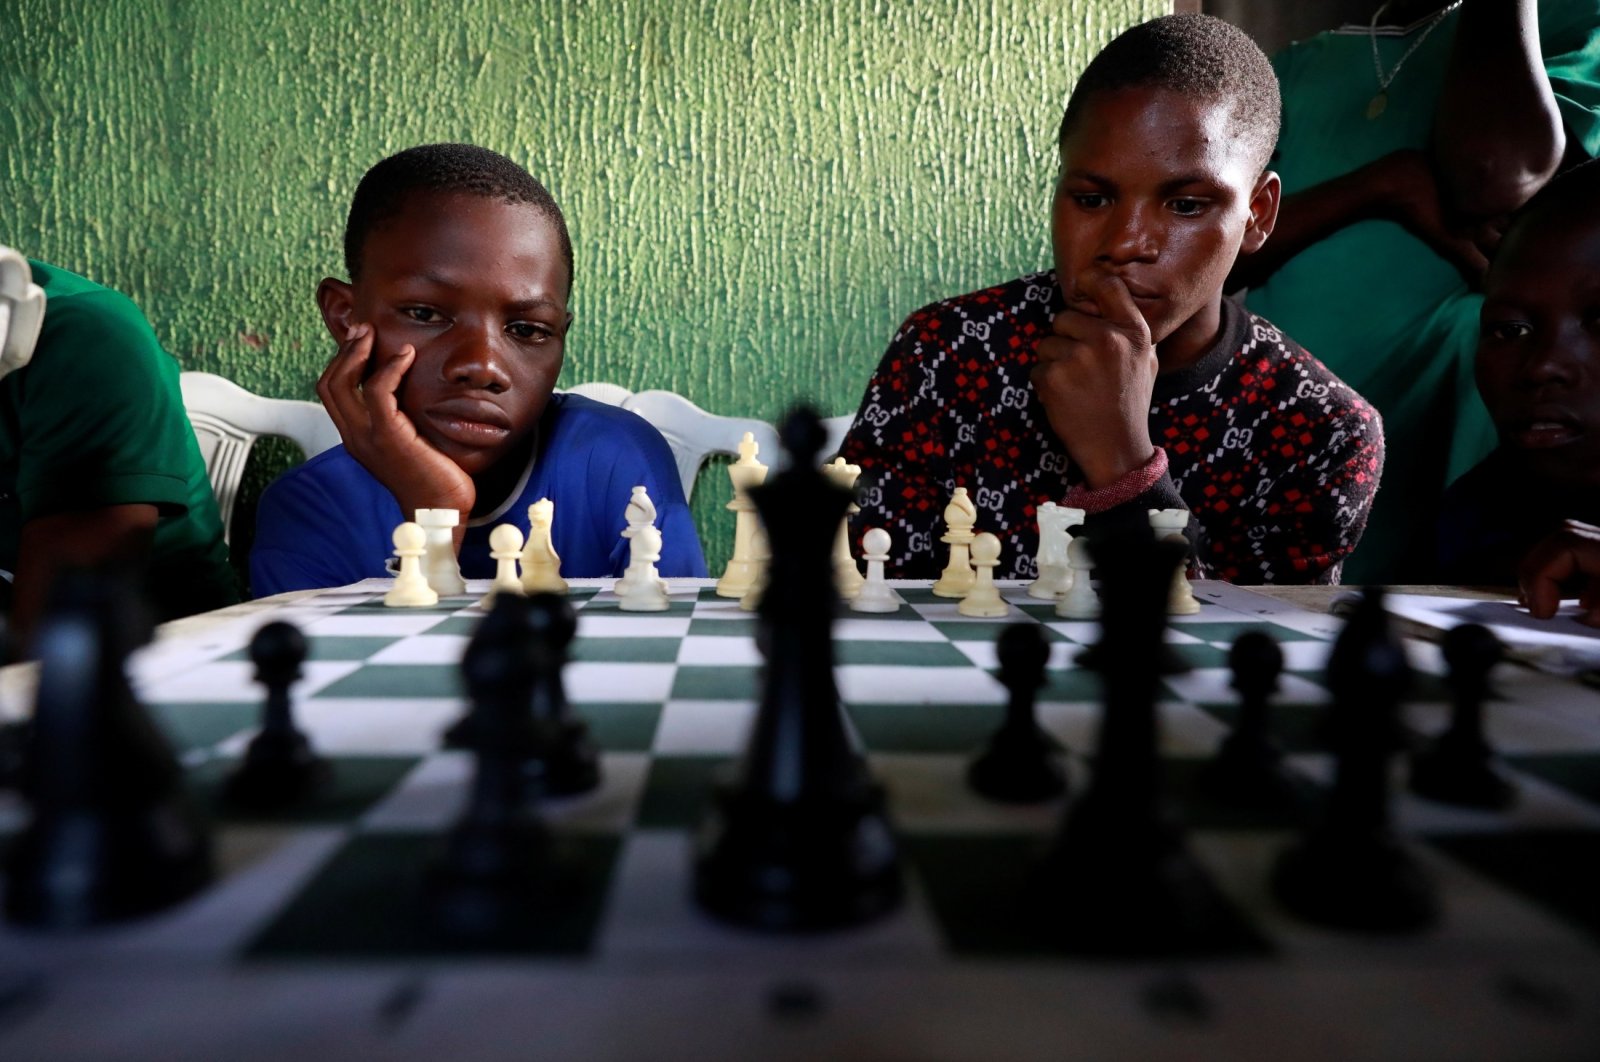 Children play chess at a community palace in Makoko, Lagos, Nigeria, May 5, 2021. (Reuters Photo)